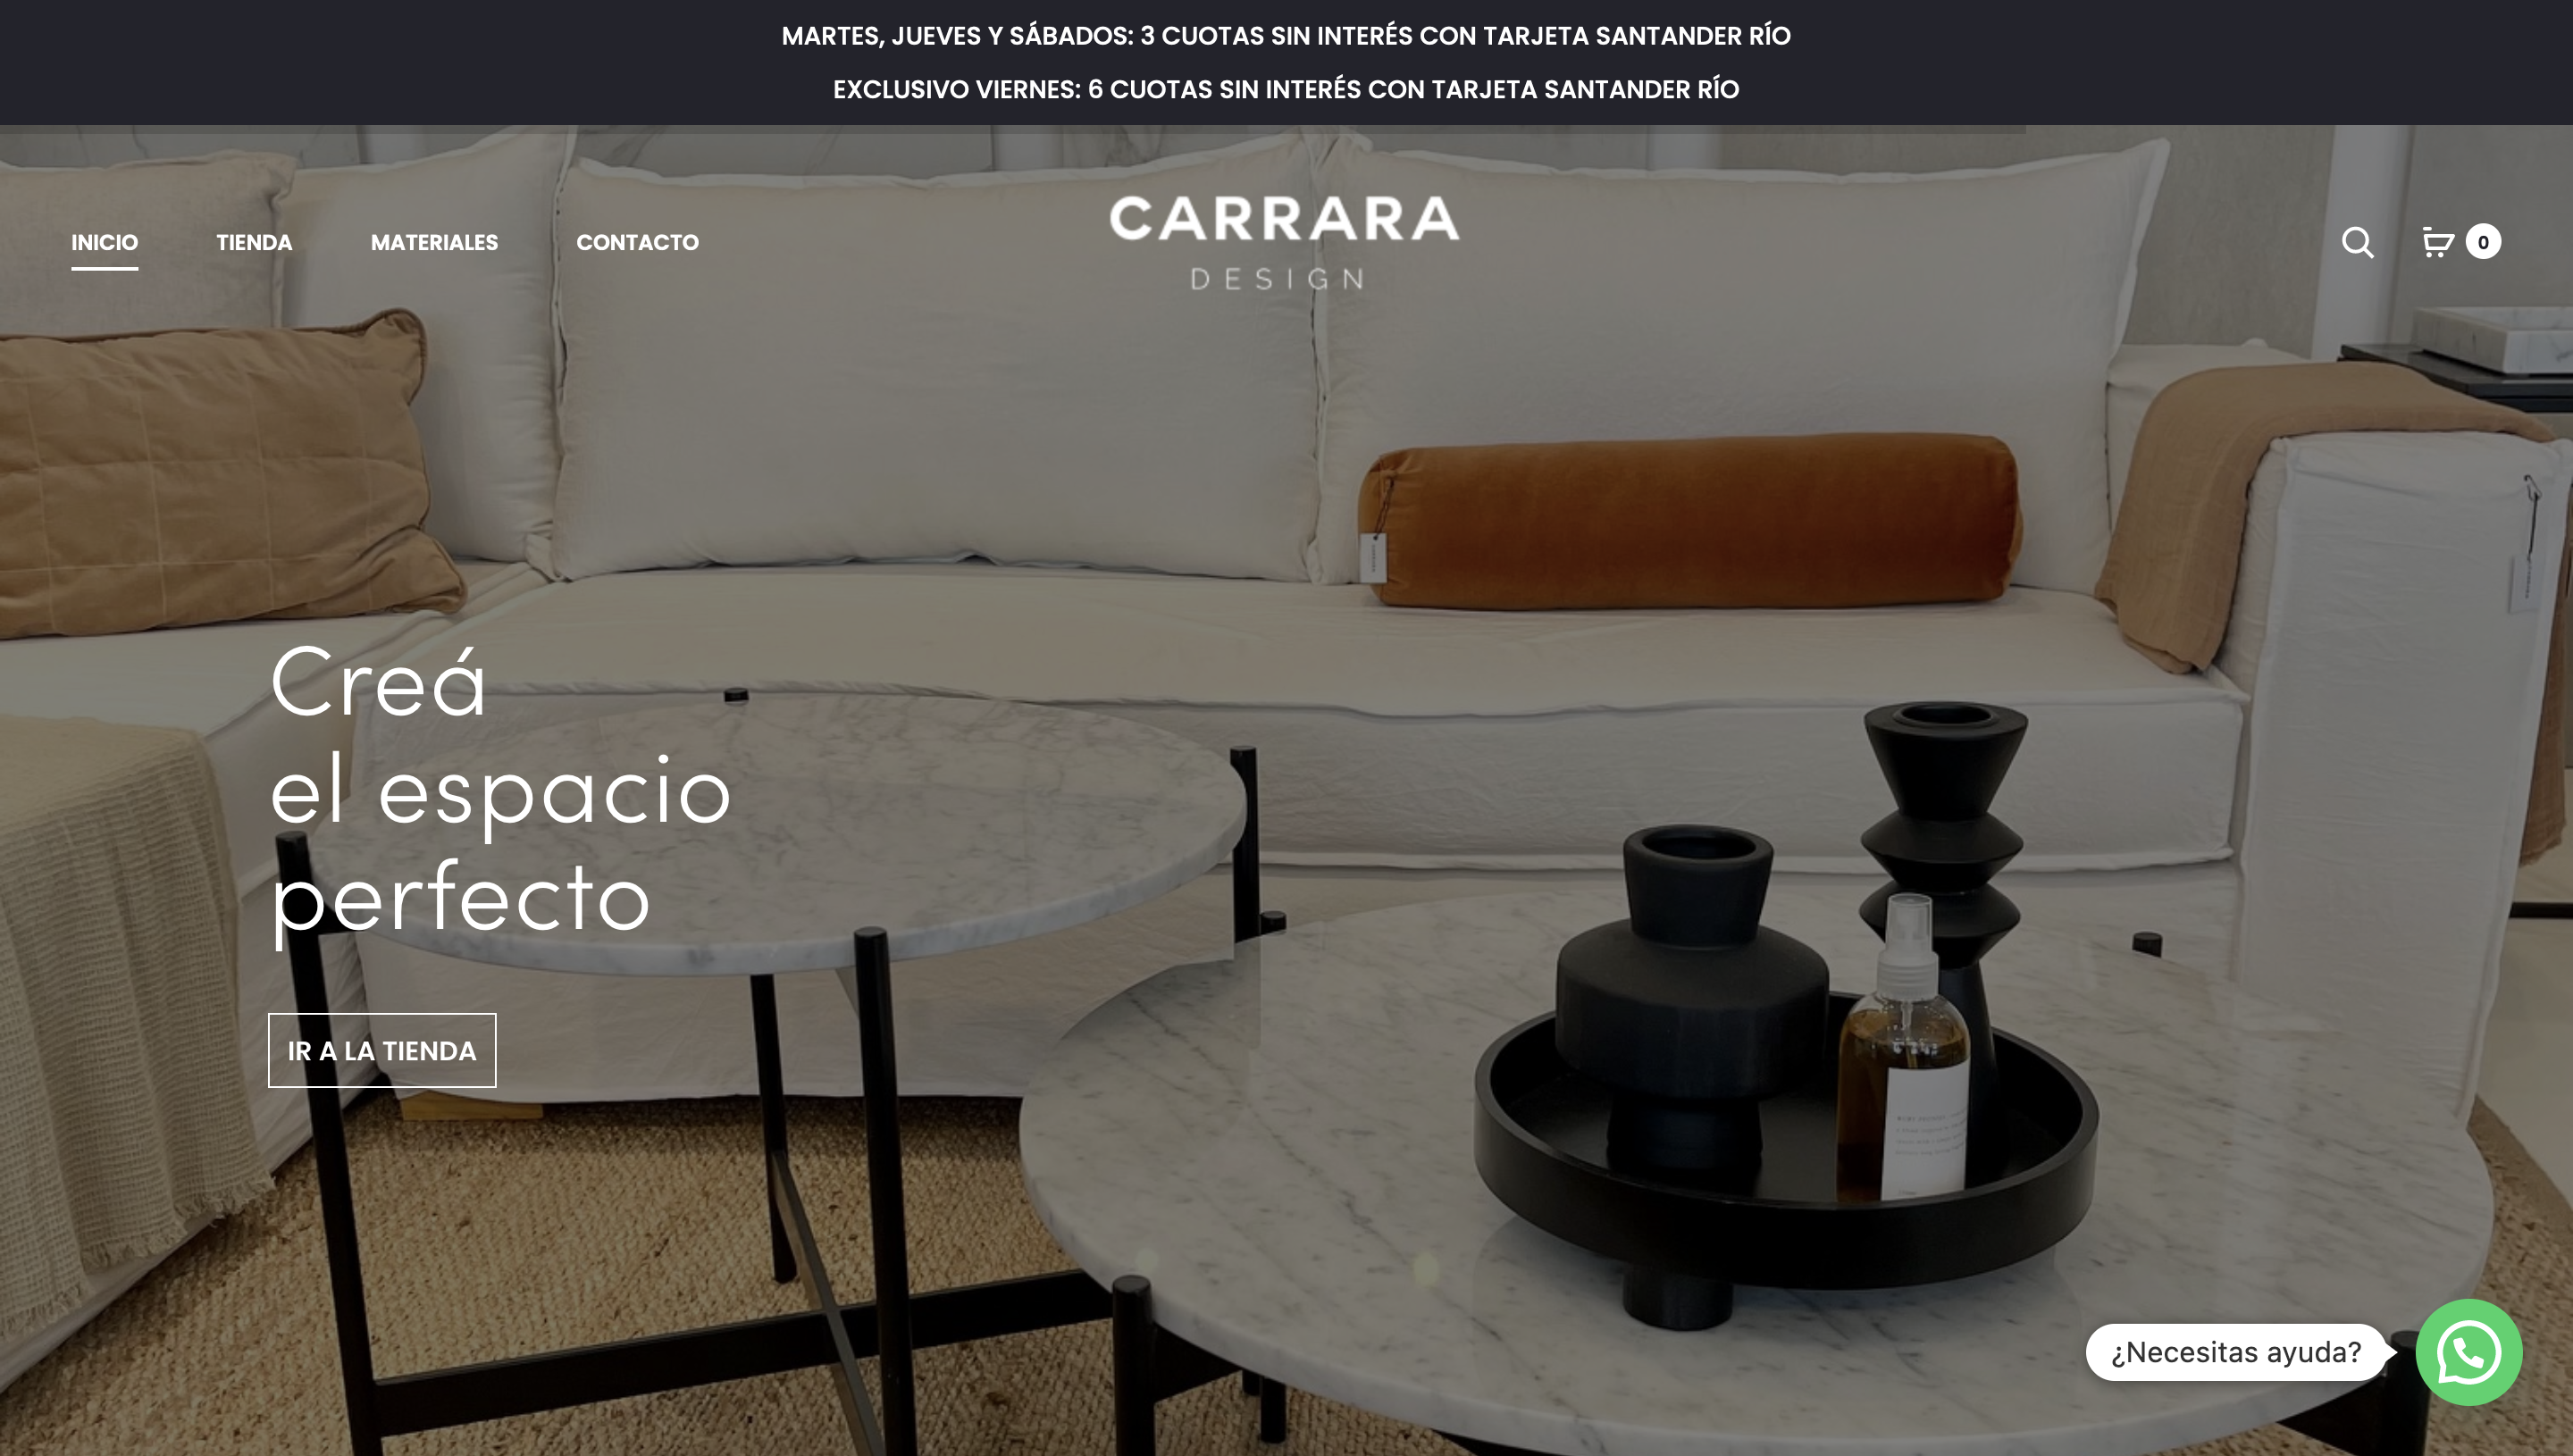 Carrara Design 2